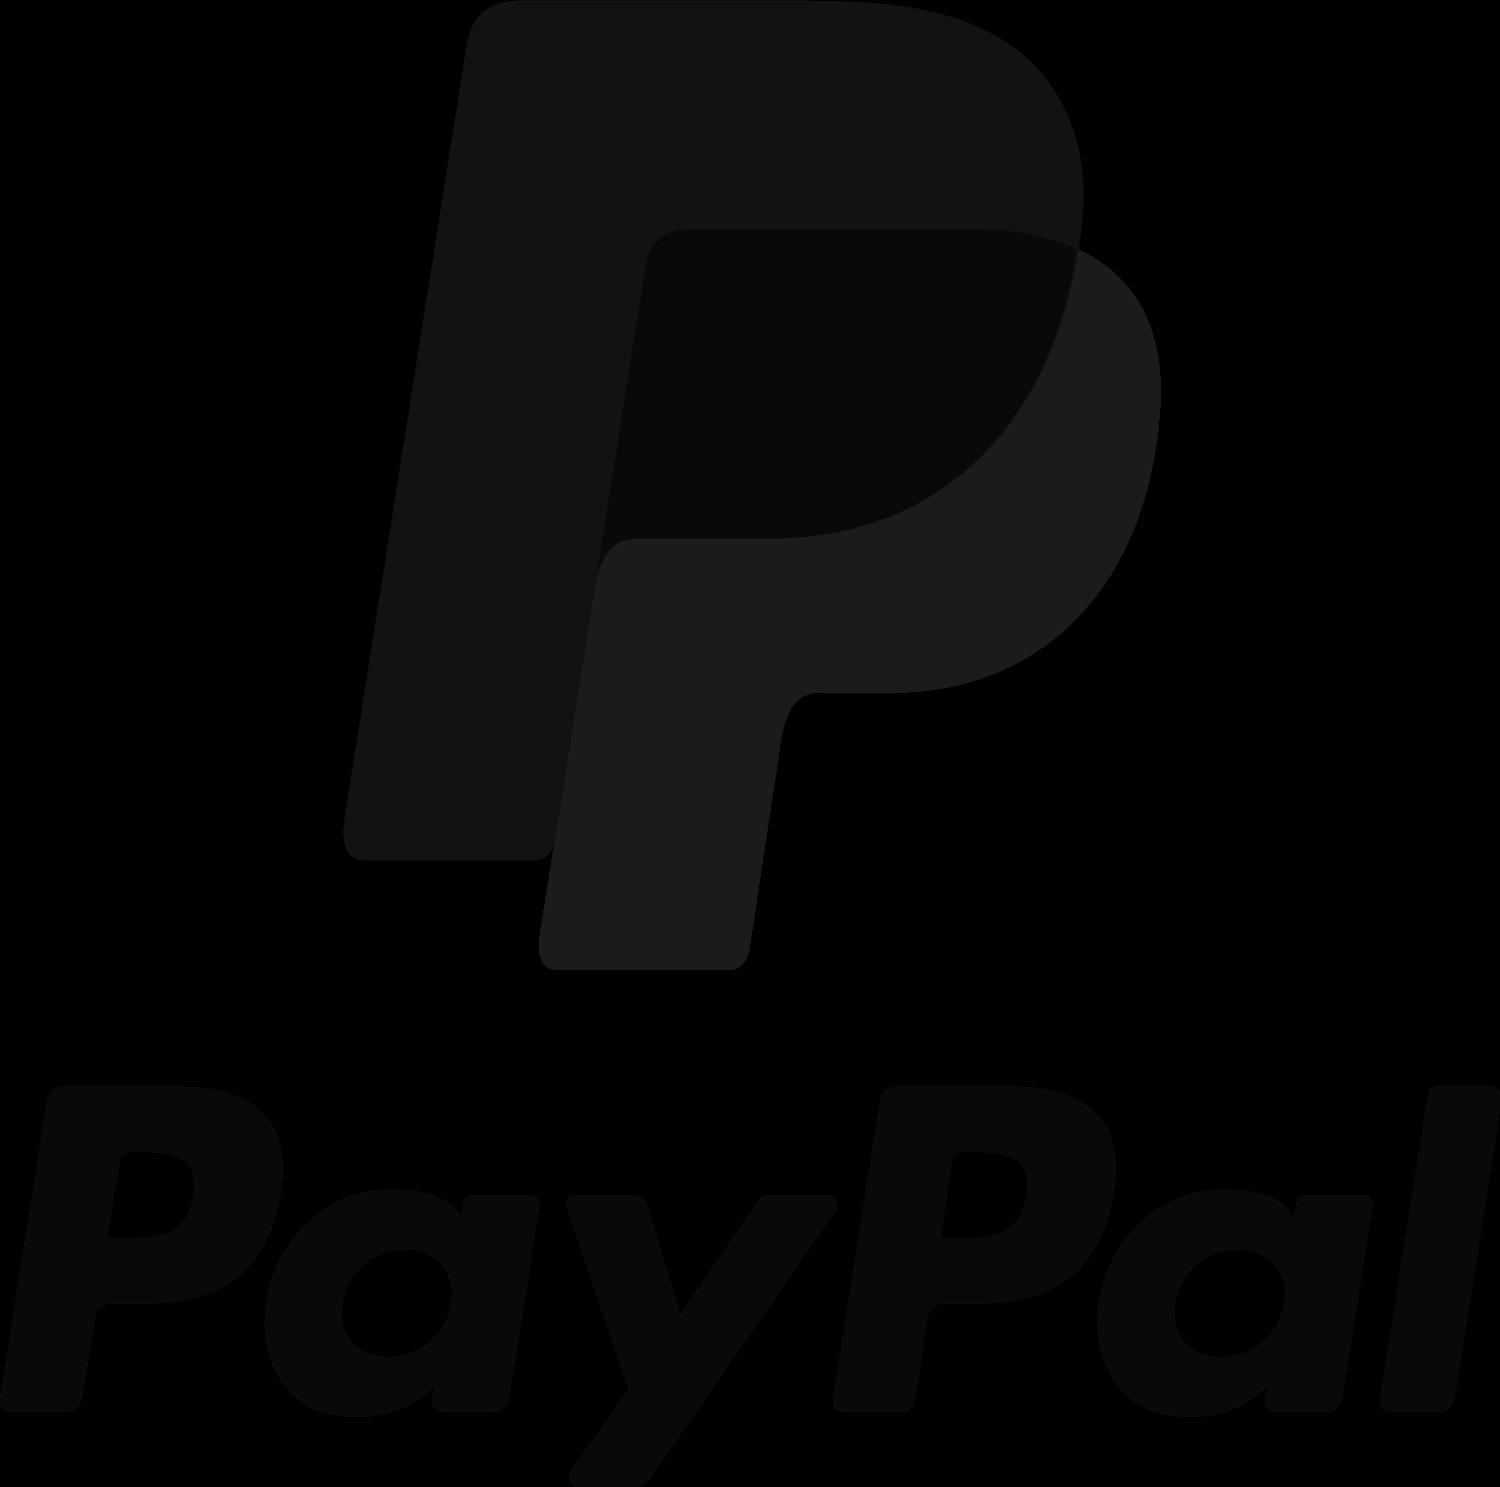 paypal logo png black